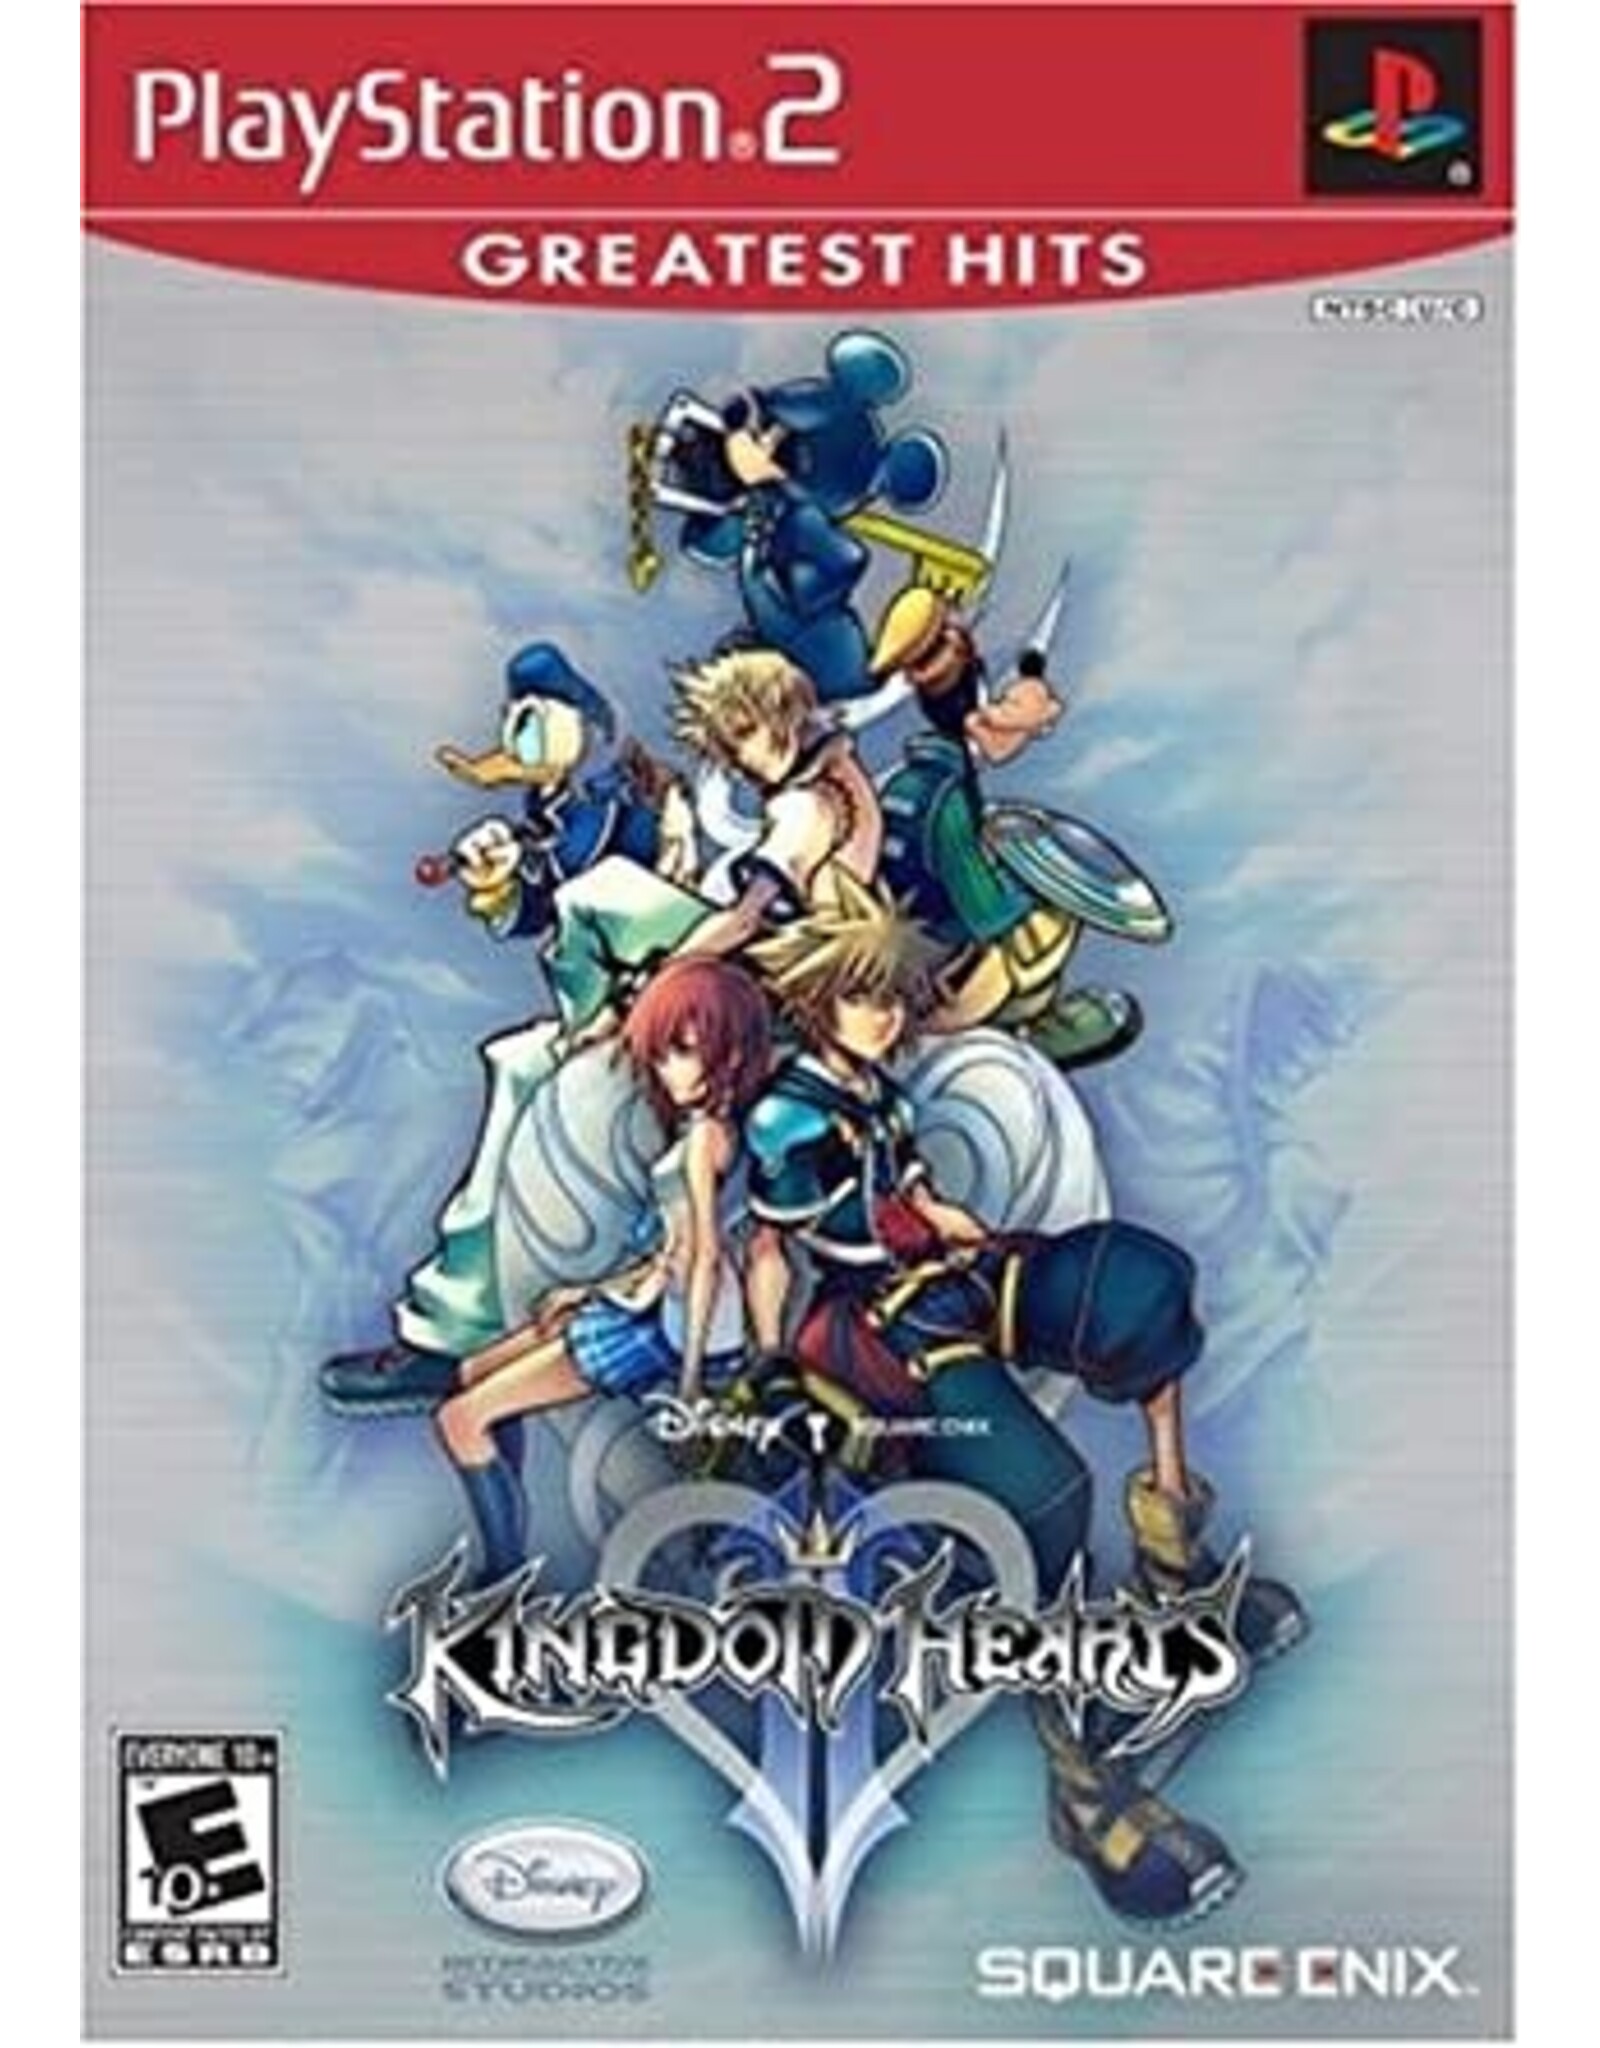 Playstation 2 Kingdom Hearts II (Greatest Hits, Brand New)